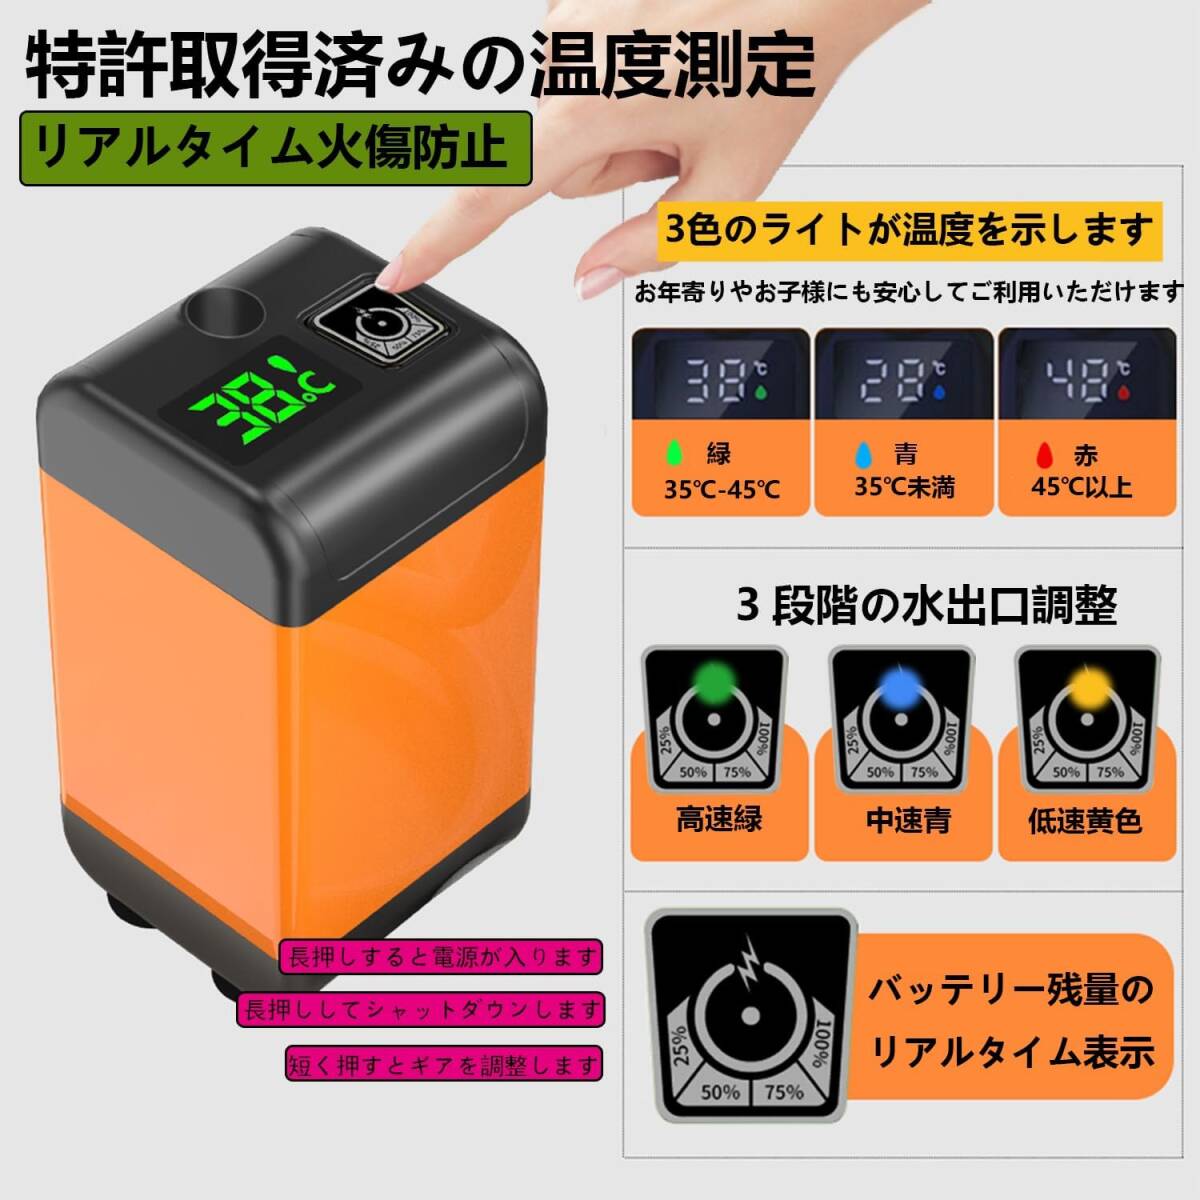 Jingdekiln ポータブルシャワー 電動 アウトドア、簡易、キャンプシャワーに最適 USB充電式 温度測定 6000mAh _画像3